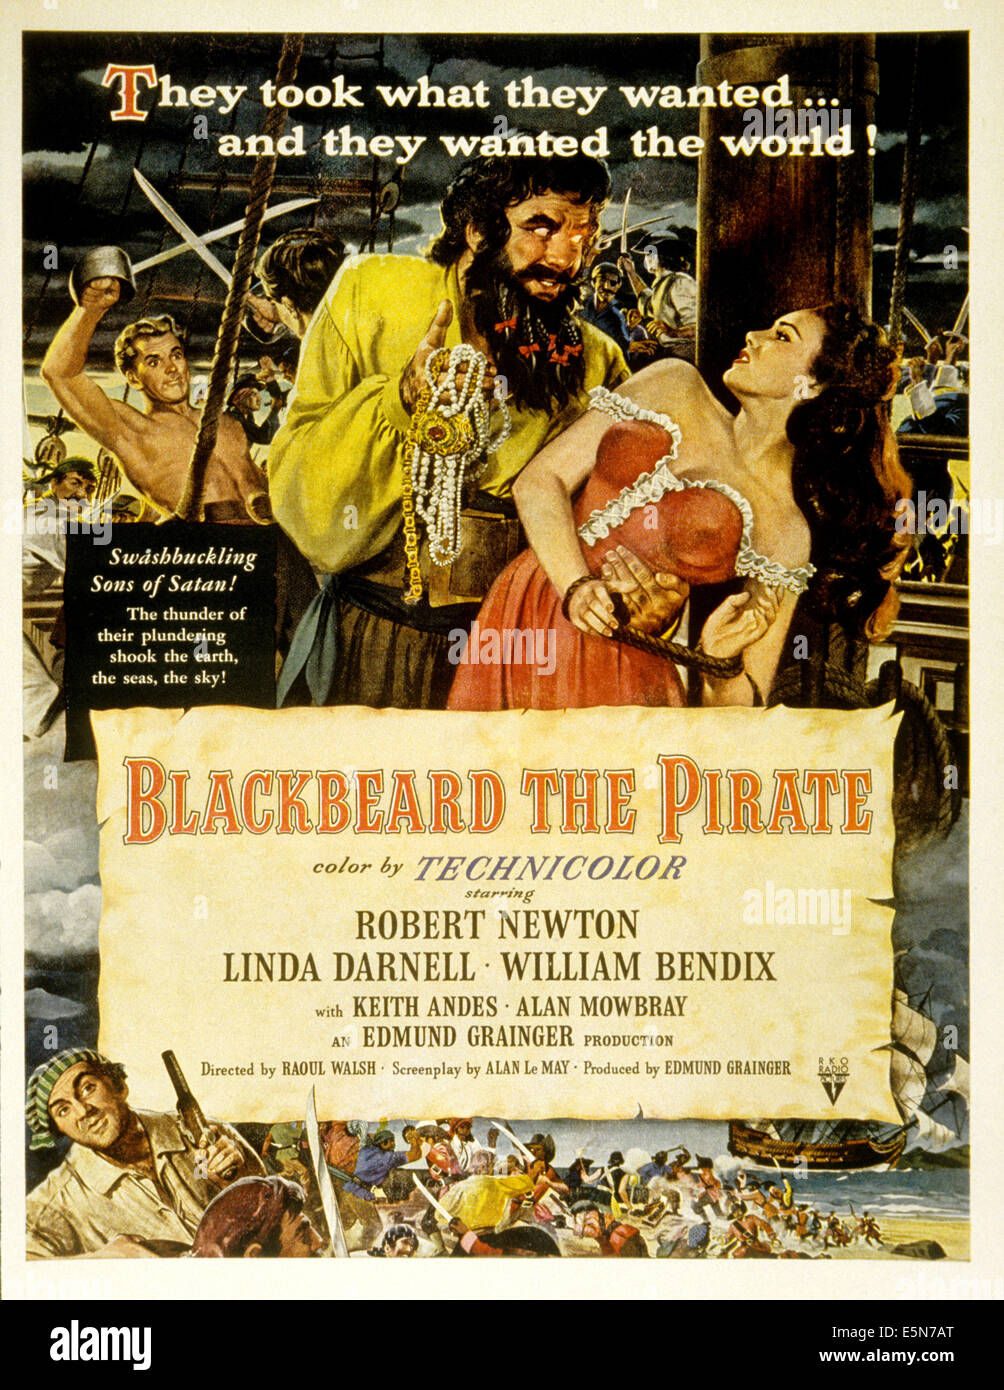 BLACKBEARD THE PIRATE, (poster art), Keith Andes, Robert Newton, Linda Darnell, William Bendix (bottom left), 1952 Stock Photo